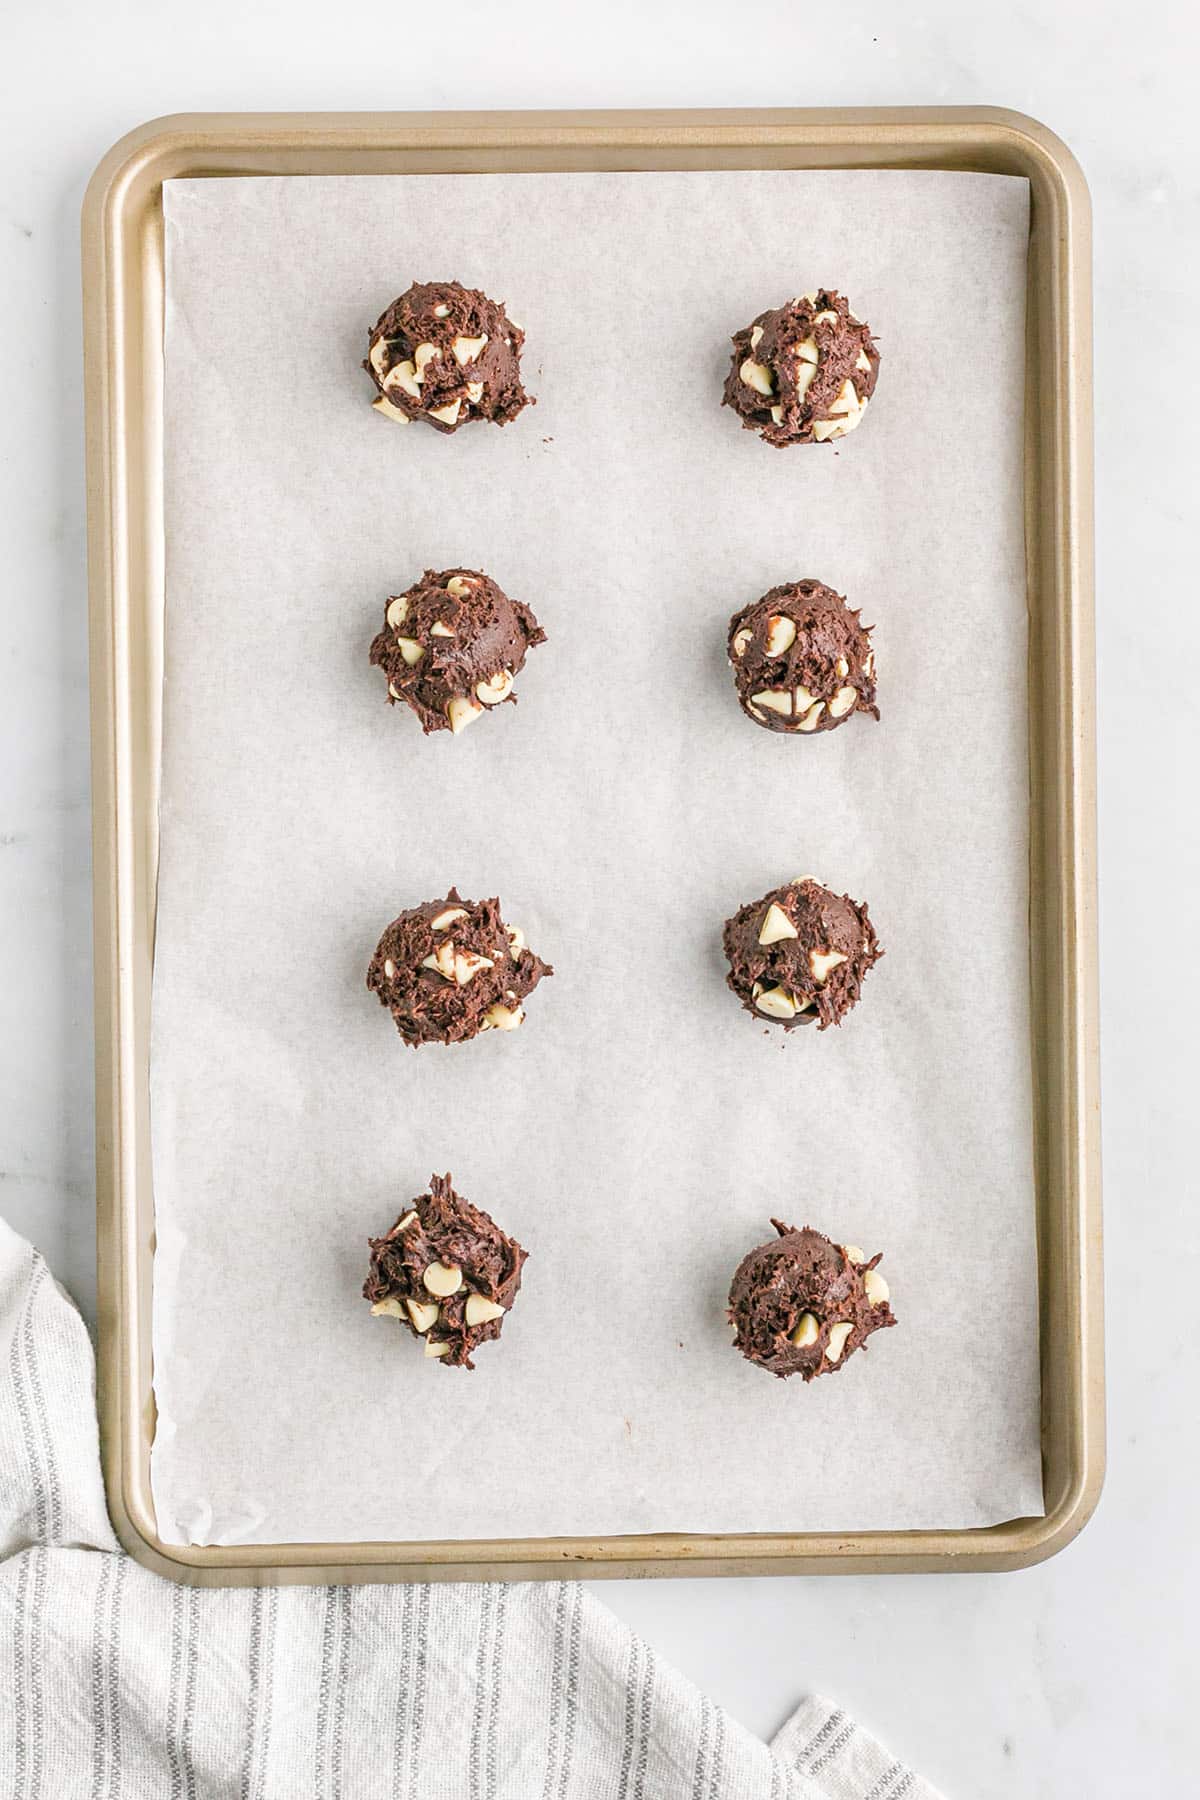 Balls of chocolate cake mix cookie dough on a baking sheet.